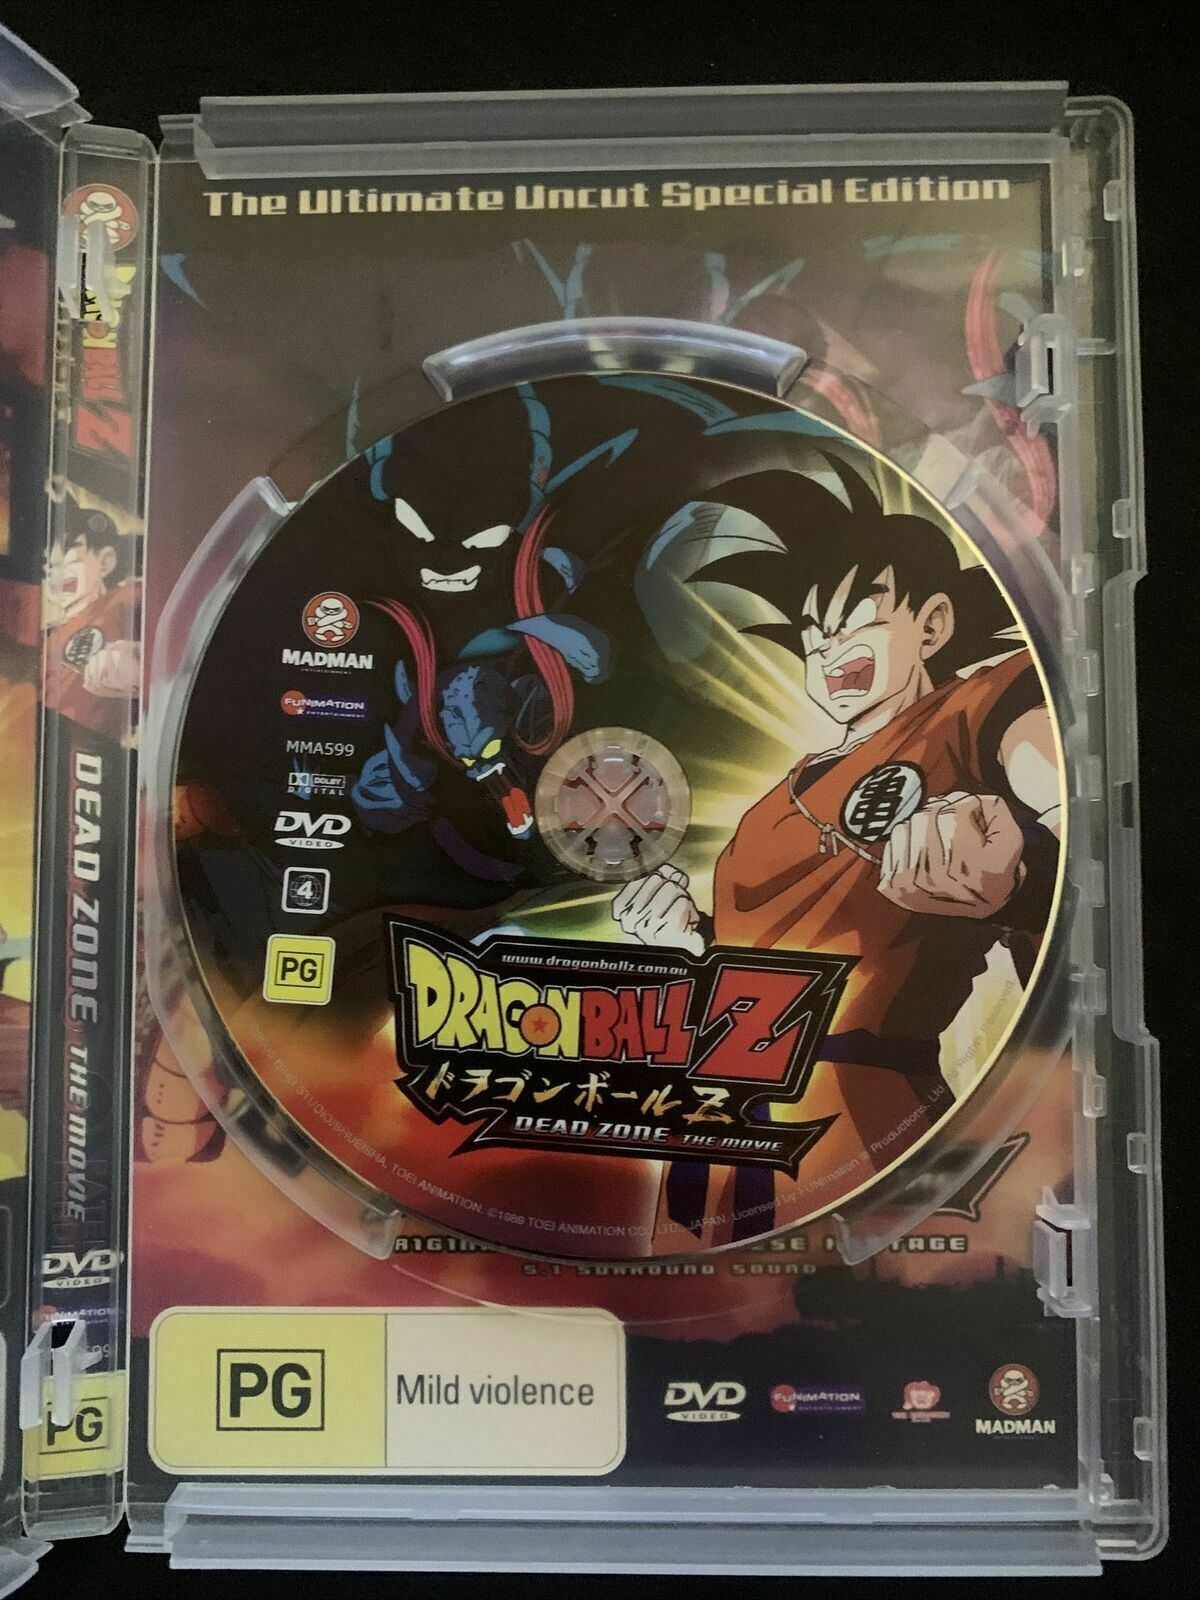 Dragonball Z: Dead Zone The Movie - Uncut Special Edition (DVD) Region 4